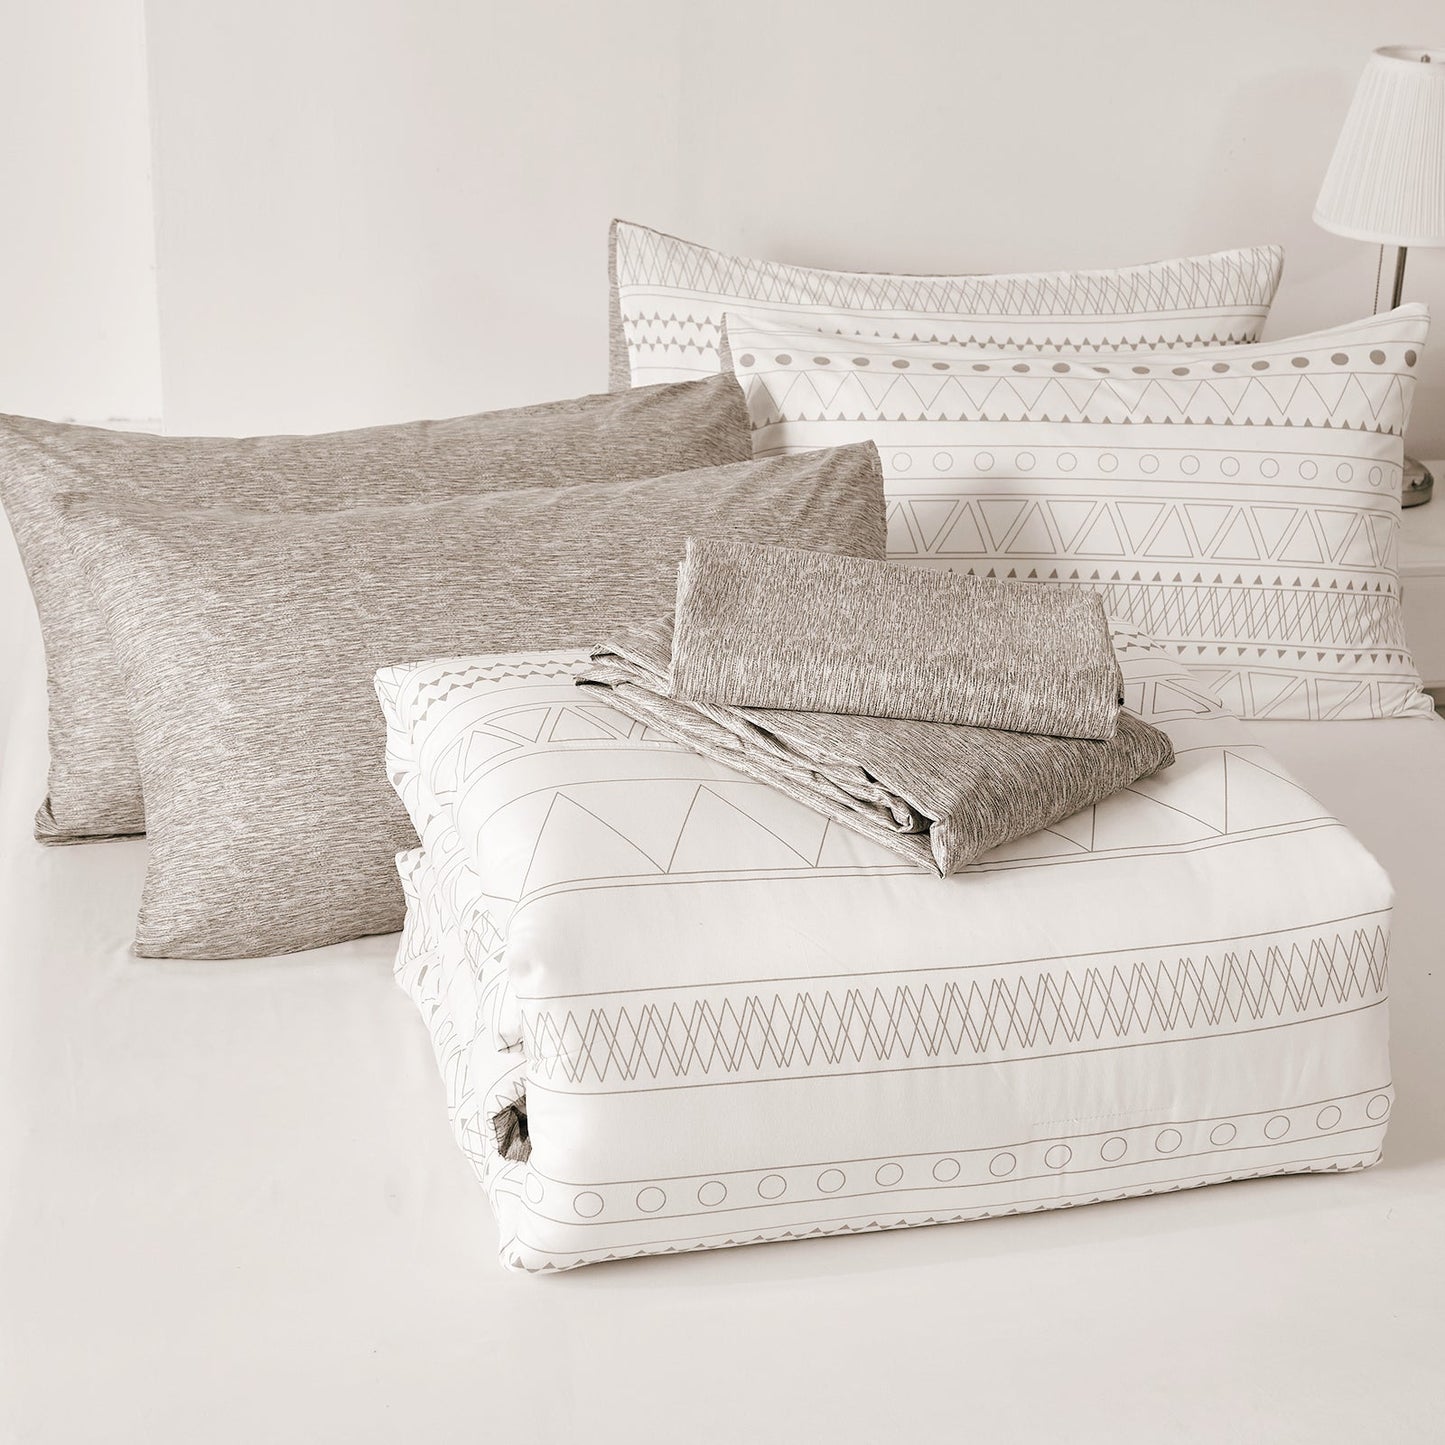 Grey Reversible Striped Bohemian 7 Pieces Comforter Set With 4 Pillowshams